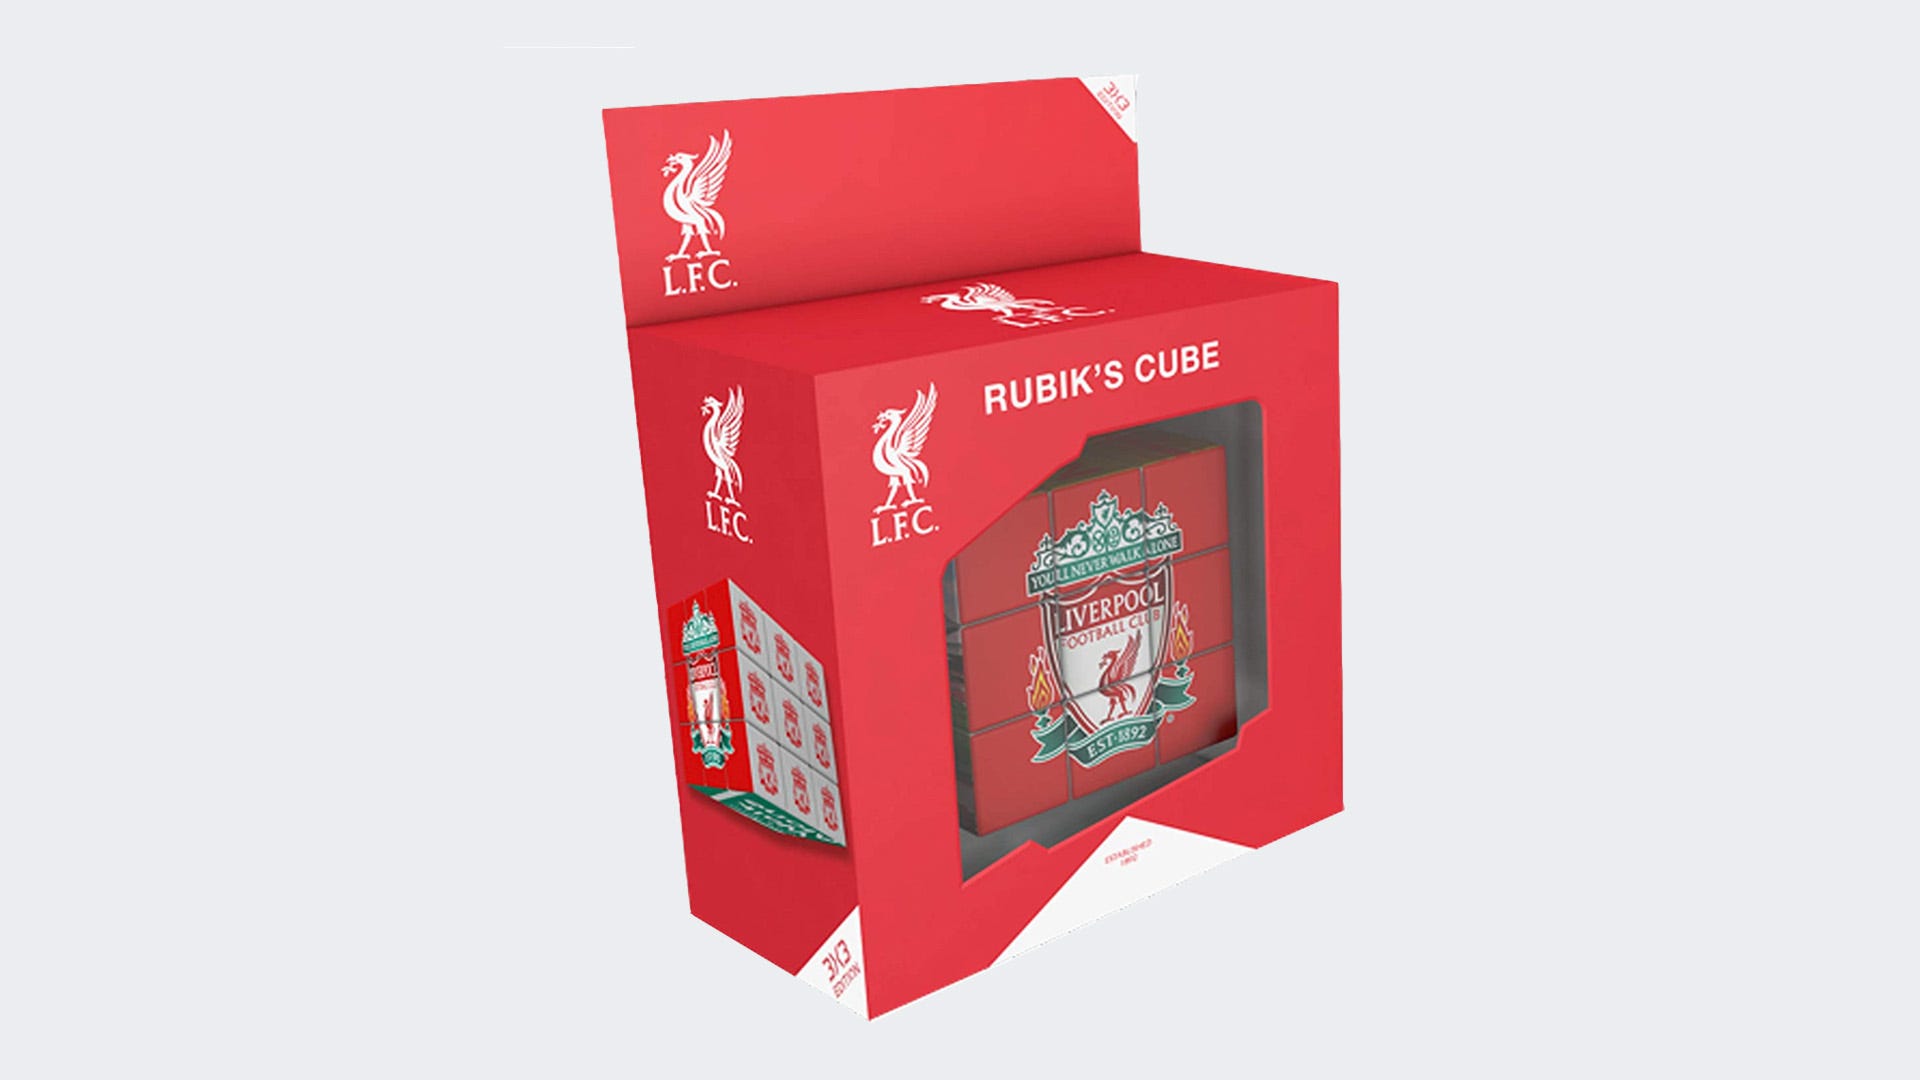 Liverpool Rubik's Cube